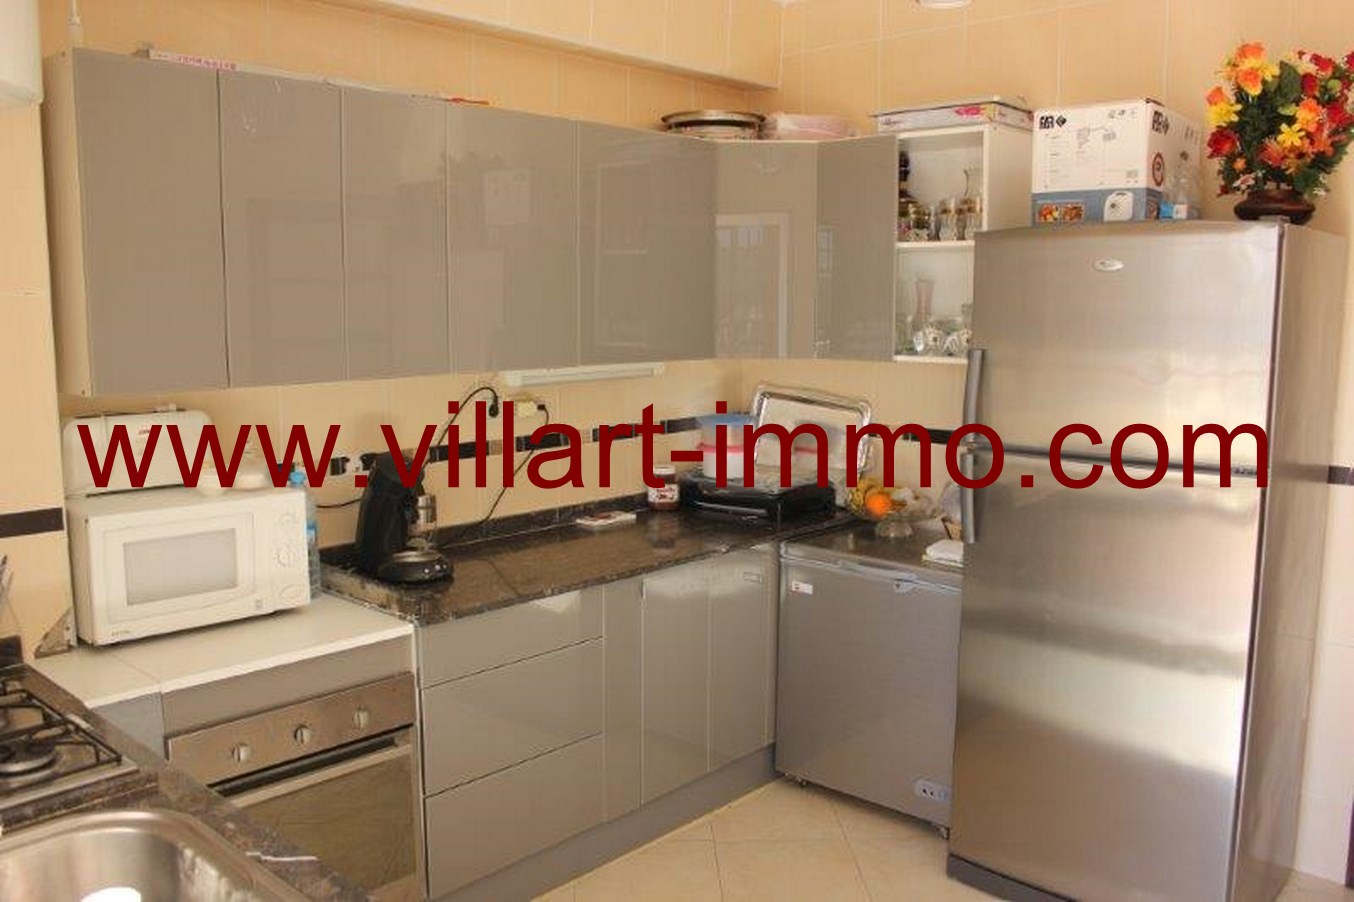 2-Location-Appartement-meublé-Tanger-cuisine-L651-Villart-immo